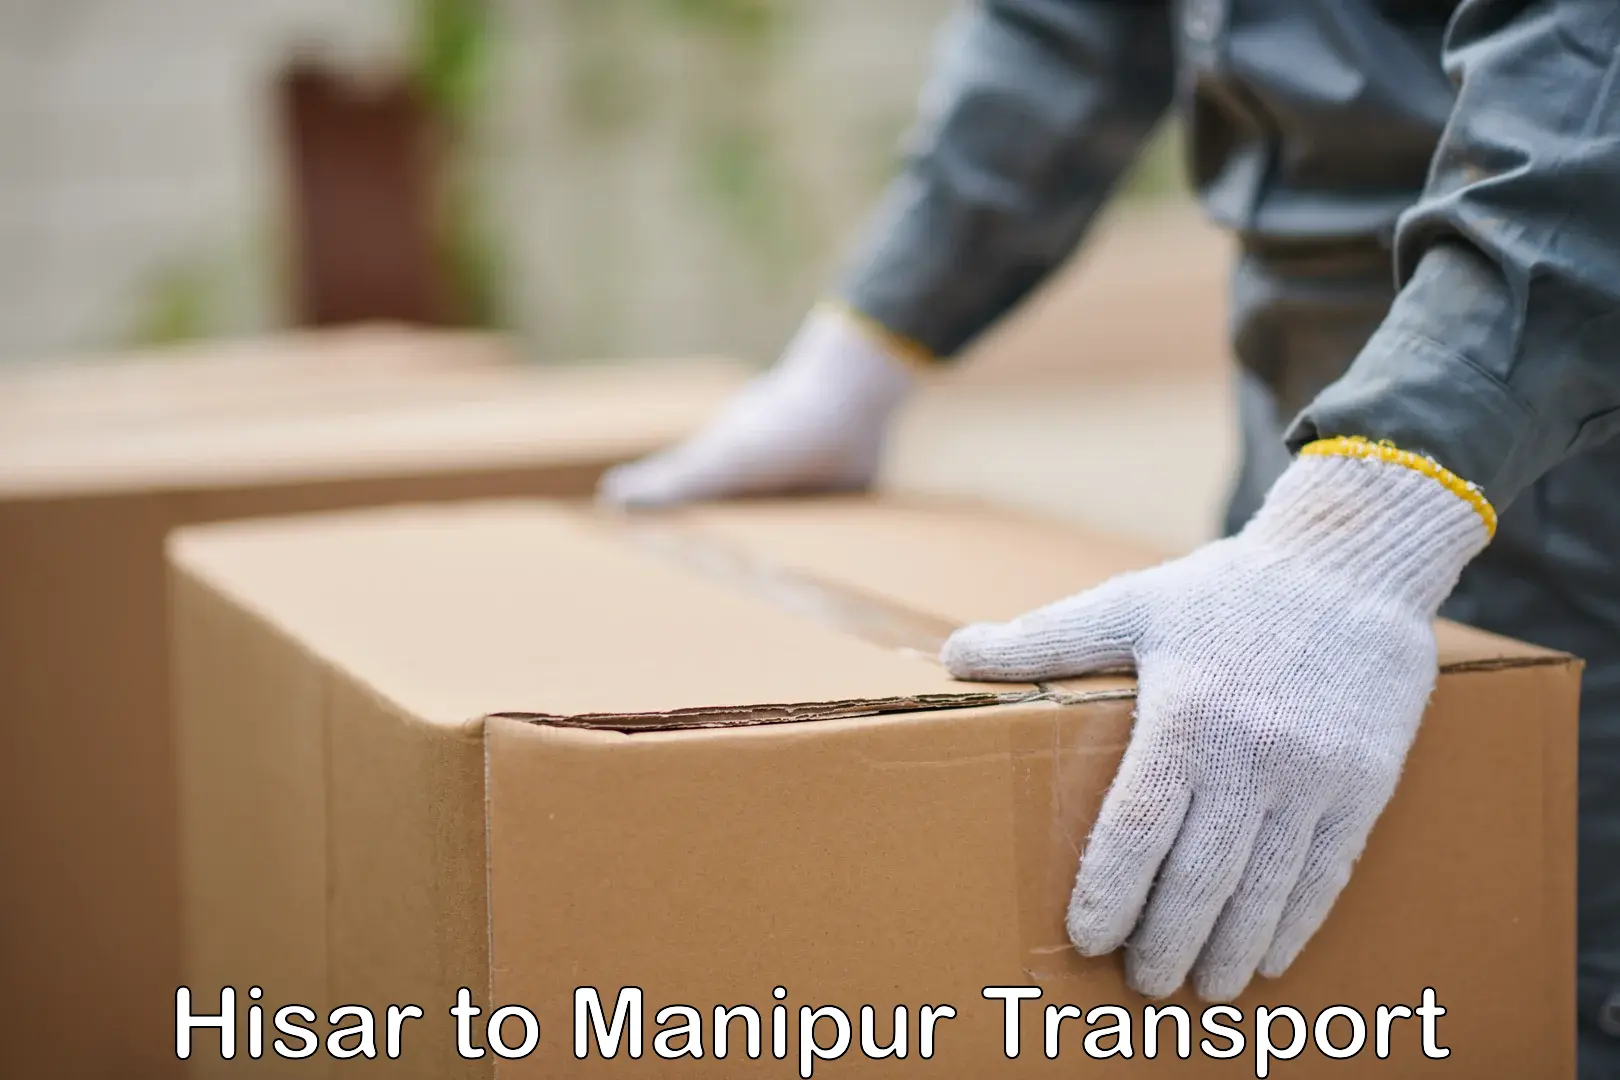 Online transport service Hisar to Manipur